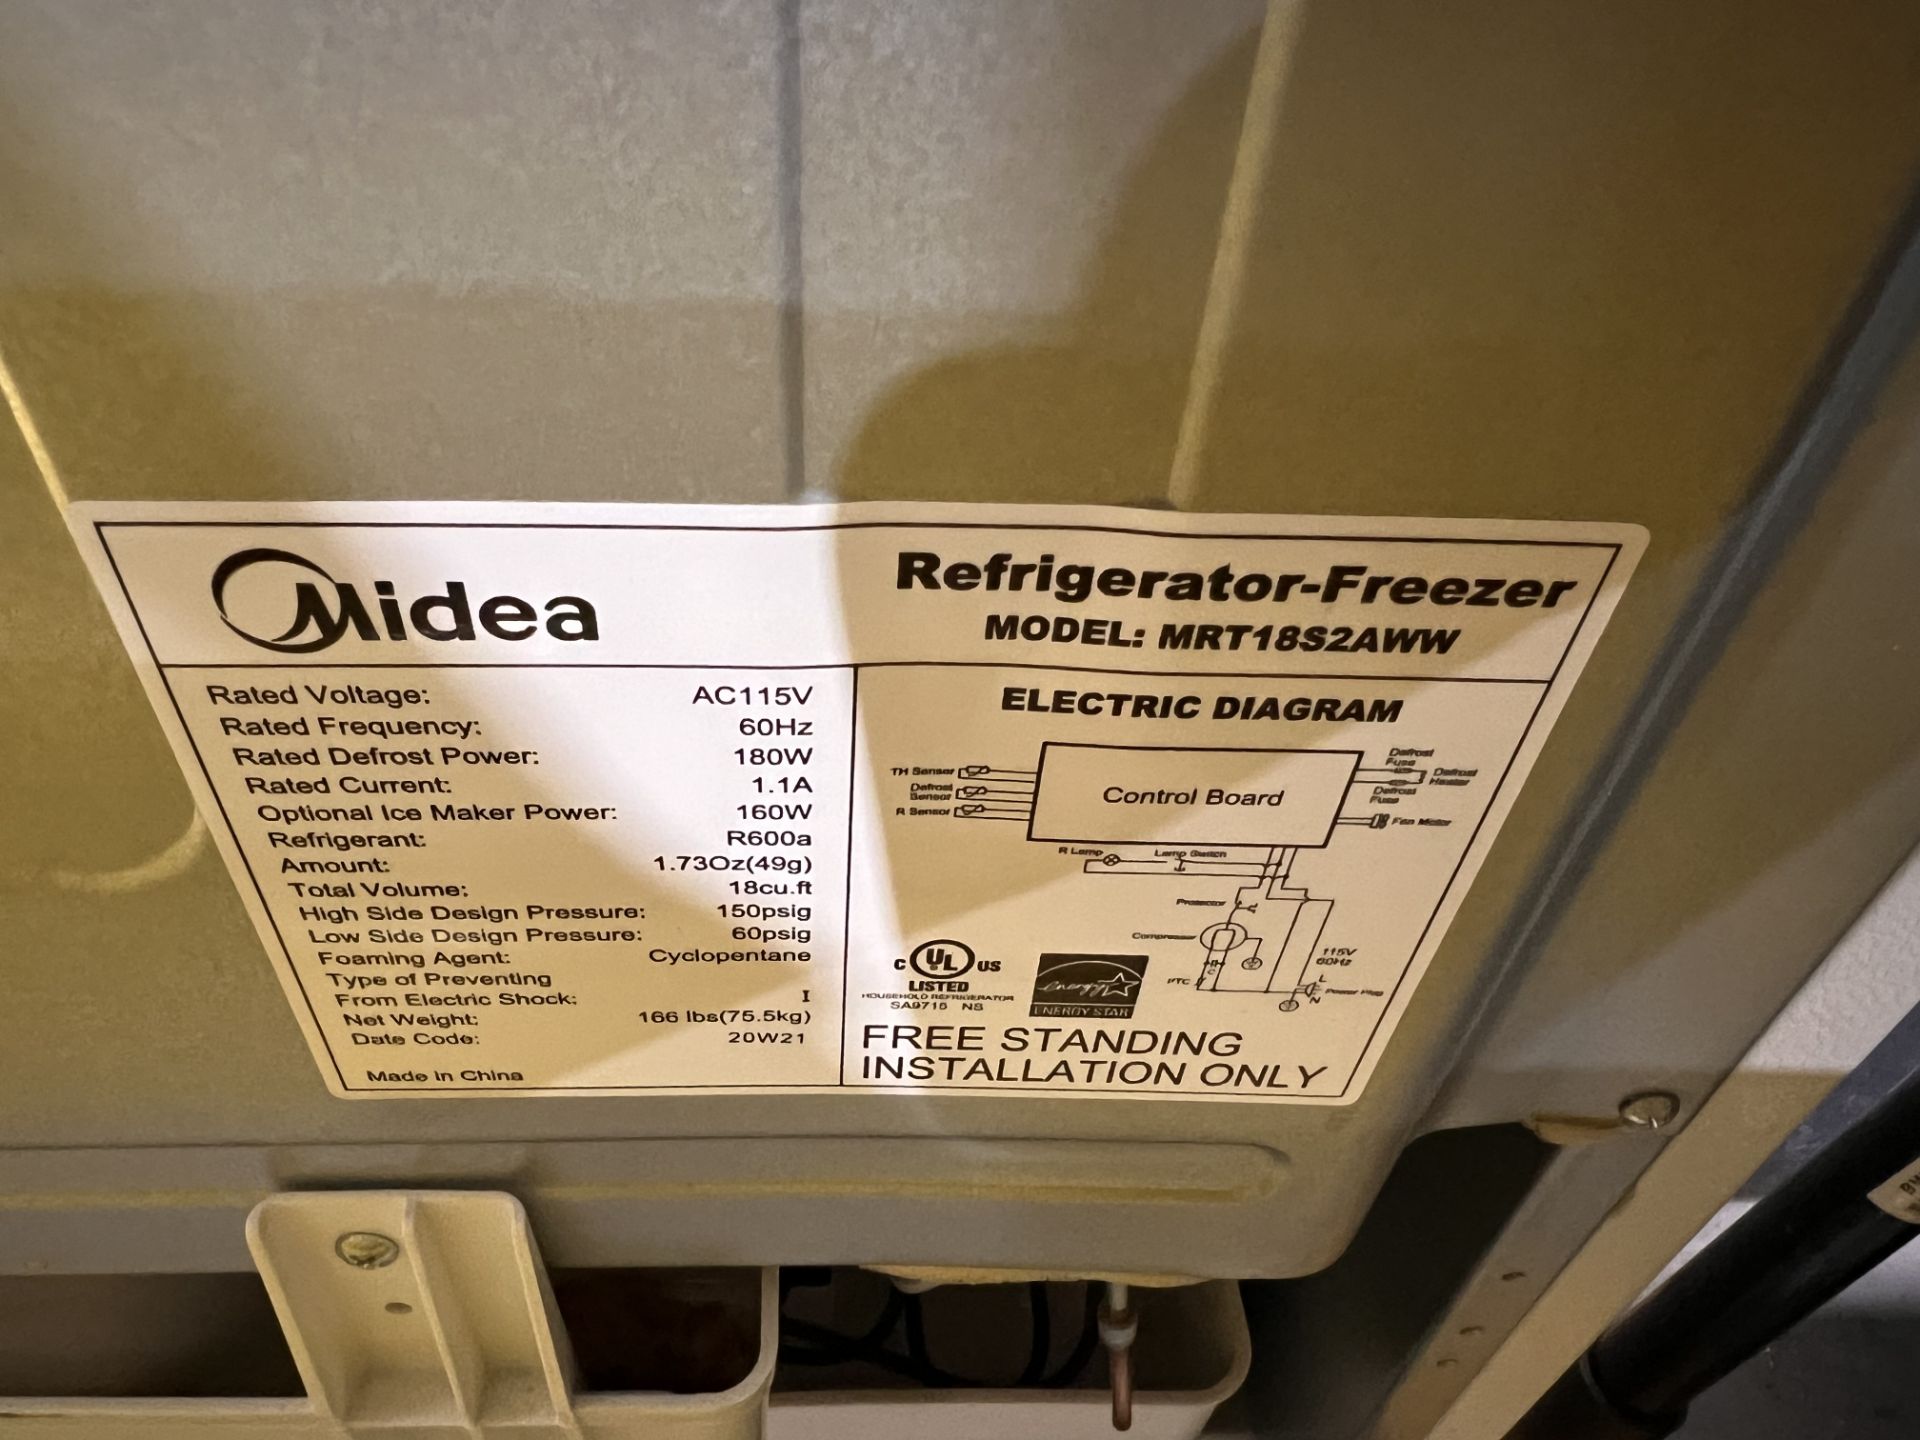 Midea Refrigerator with Freezer, Model MRT18S2AWW, 18 Cubic Ft Capacity - Image 6 of 6